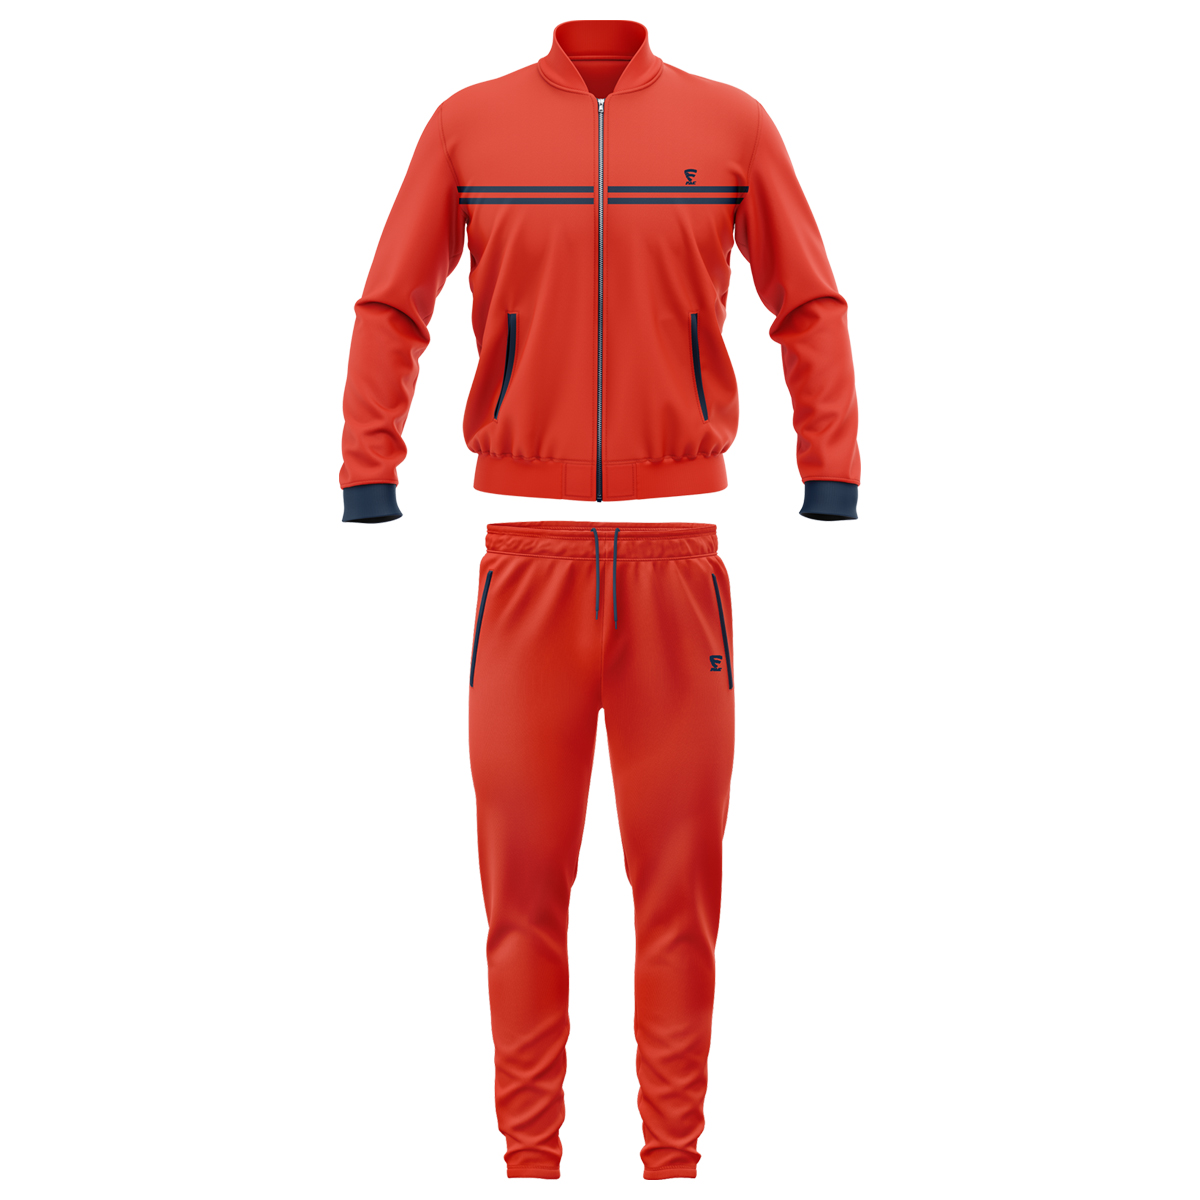 Men Track Suit’s – First American Corporation (Pvt) Ltd